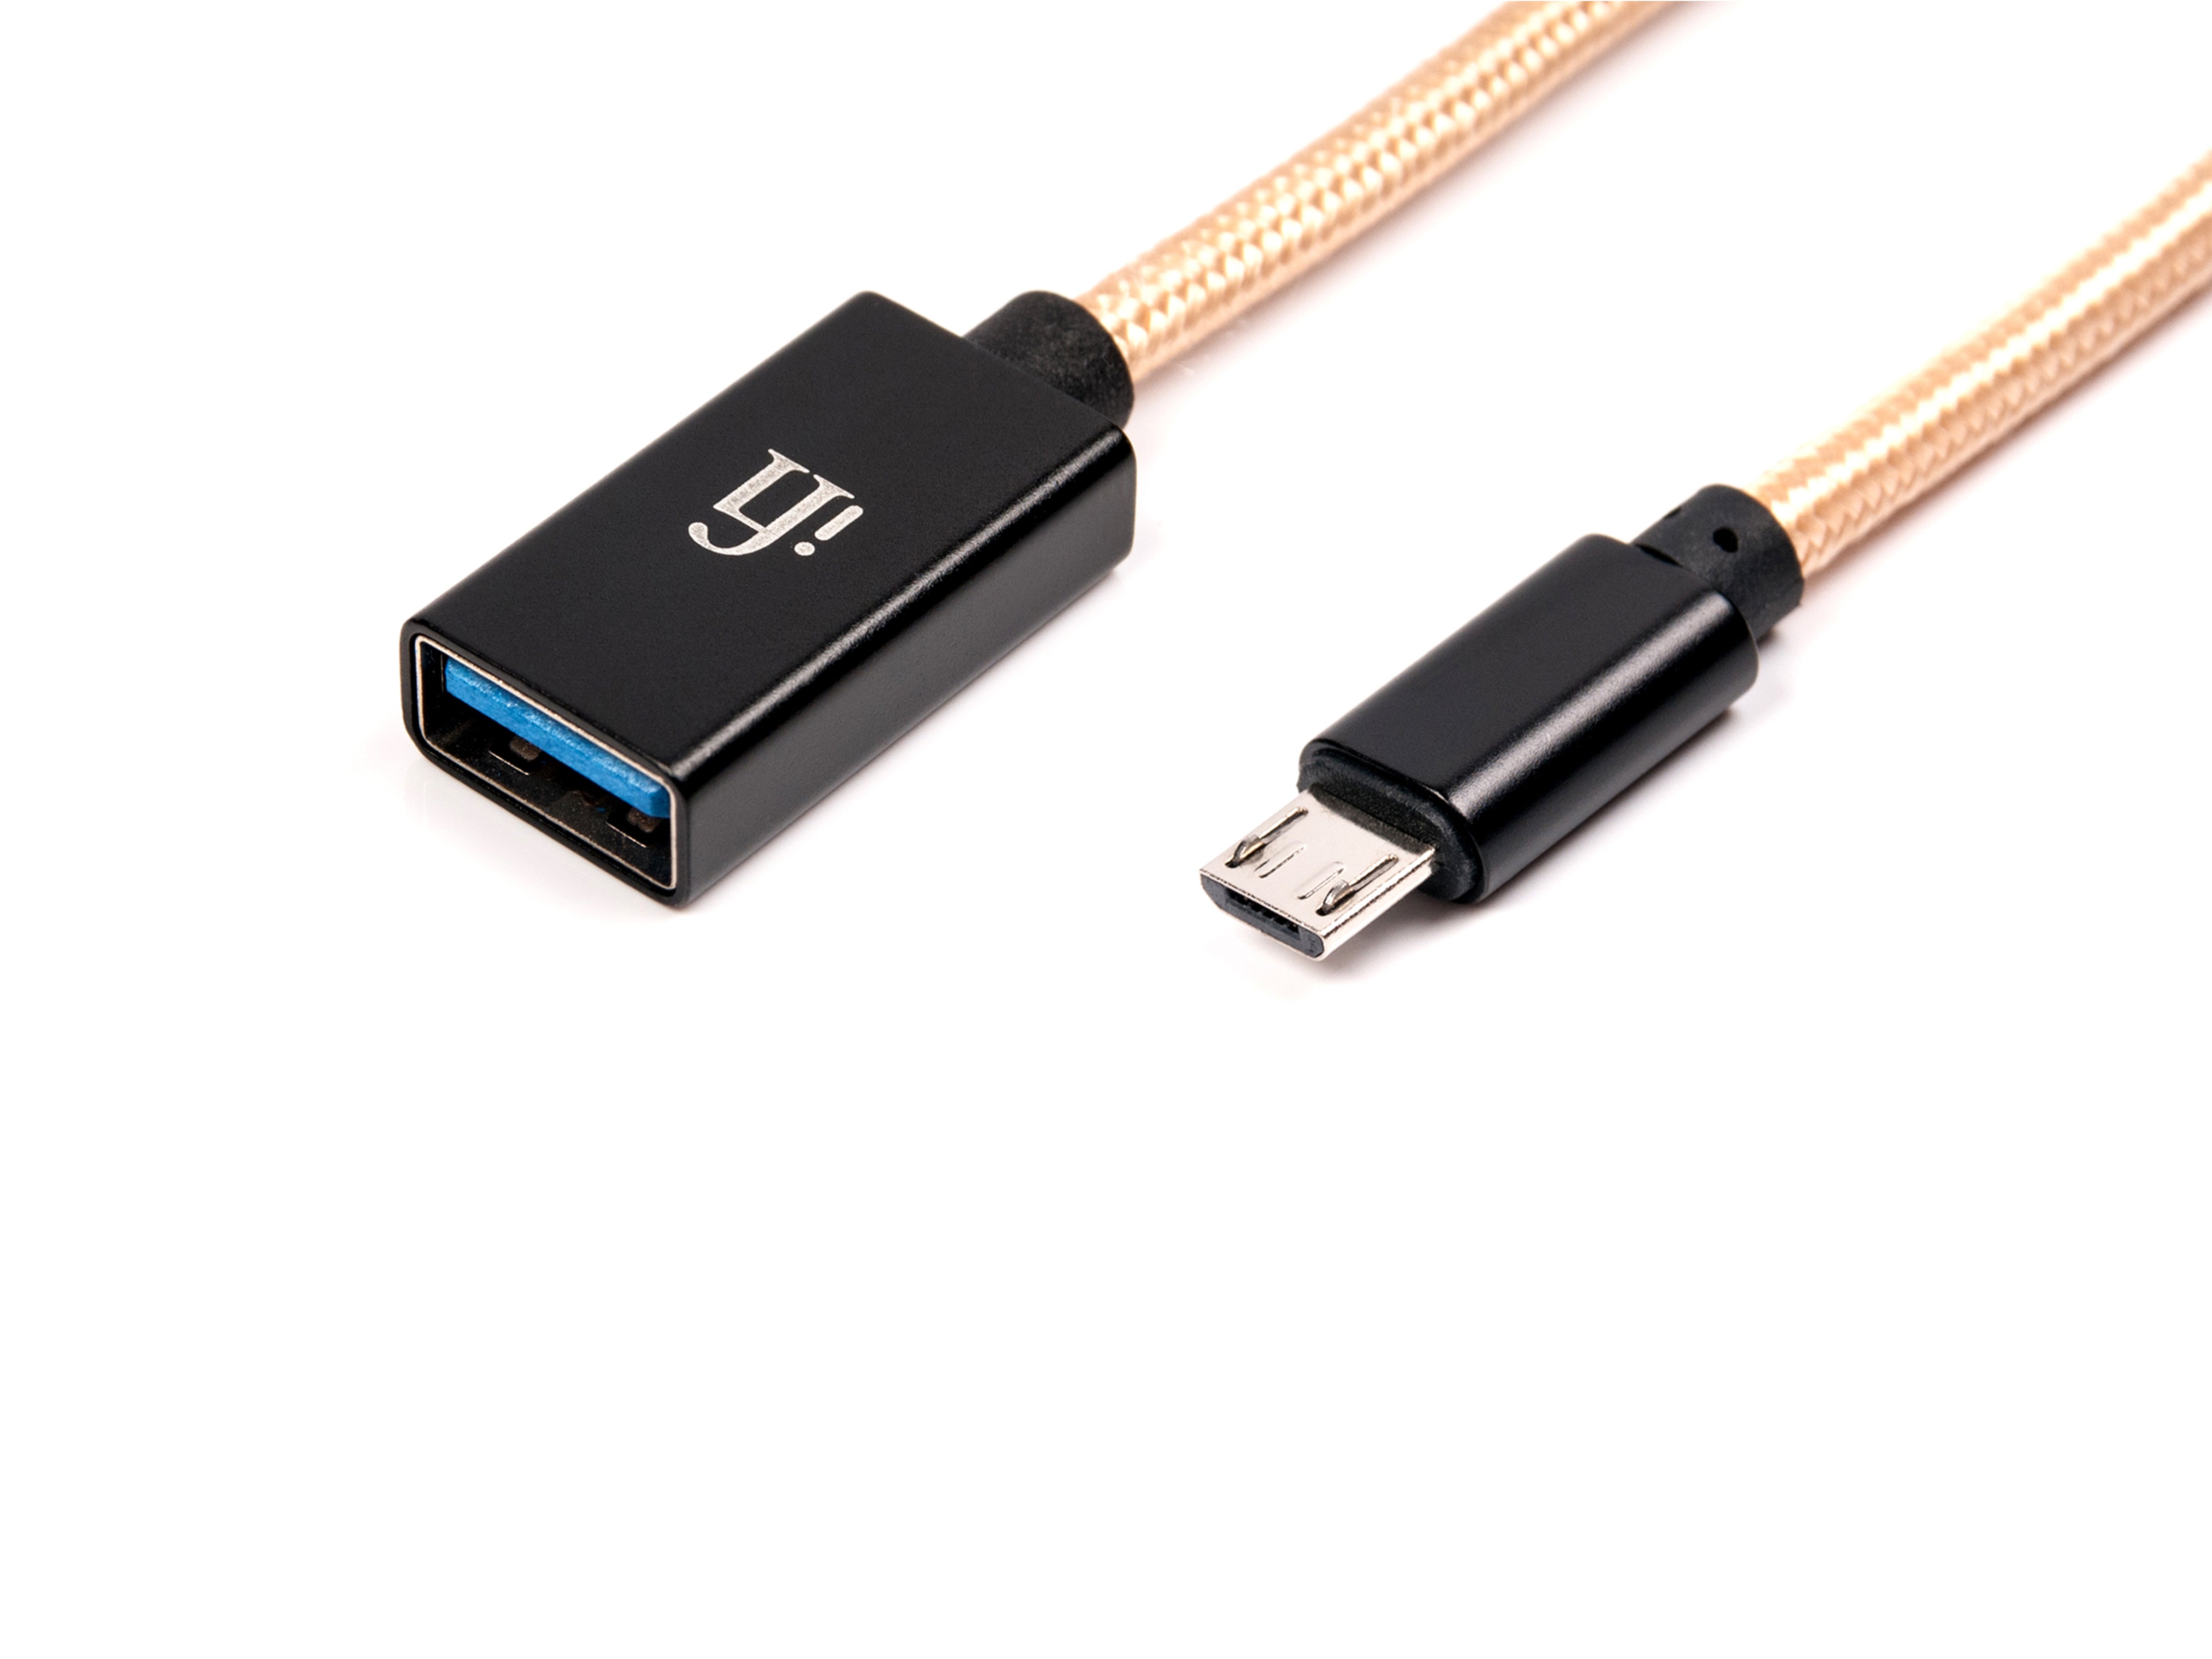 iFi Micro OTG cable